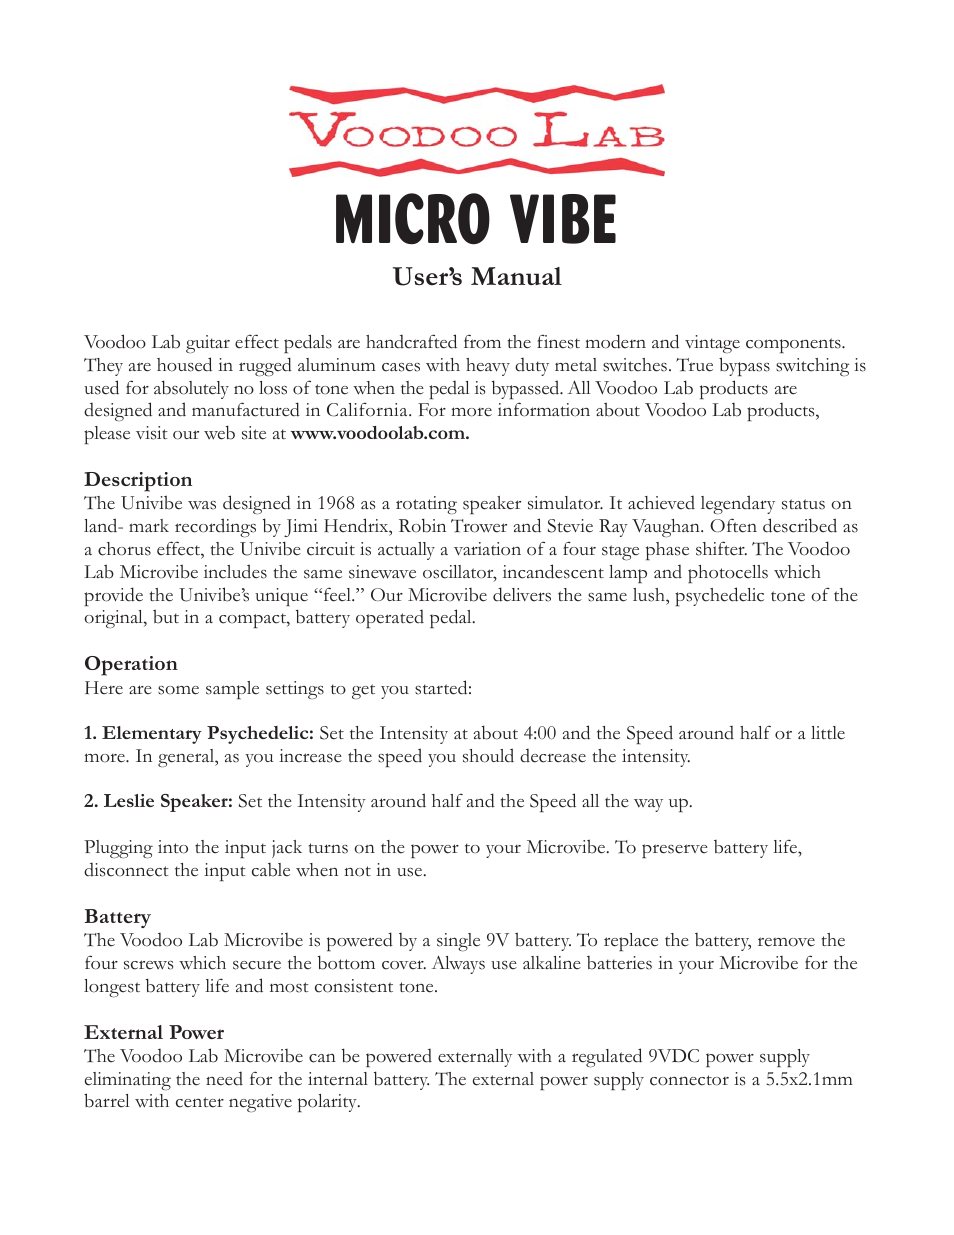 Micro Vibe